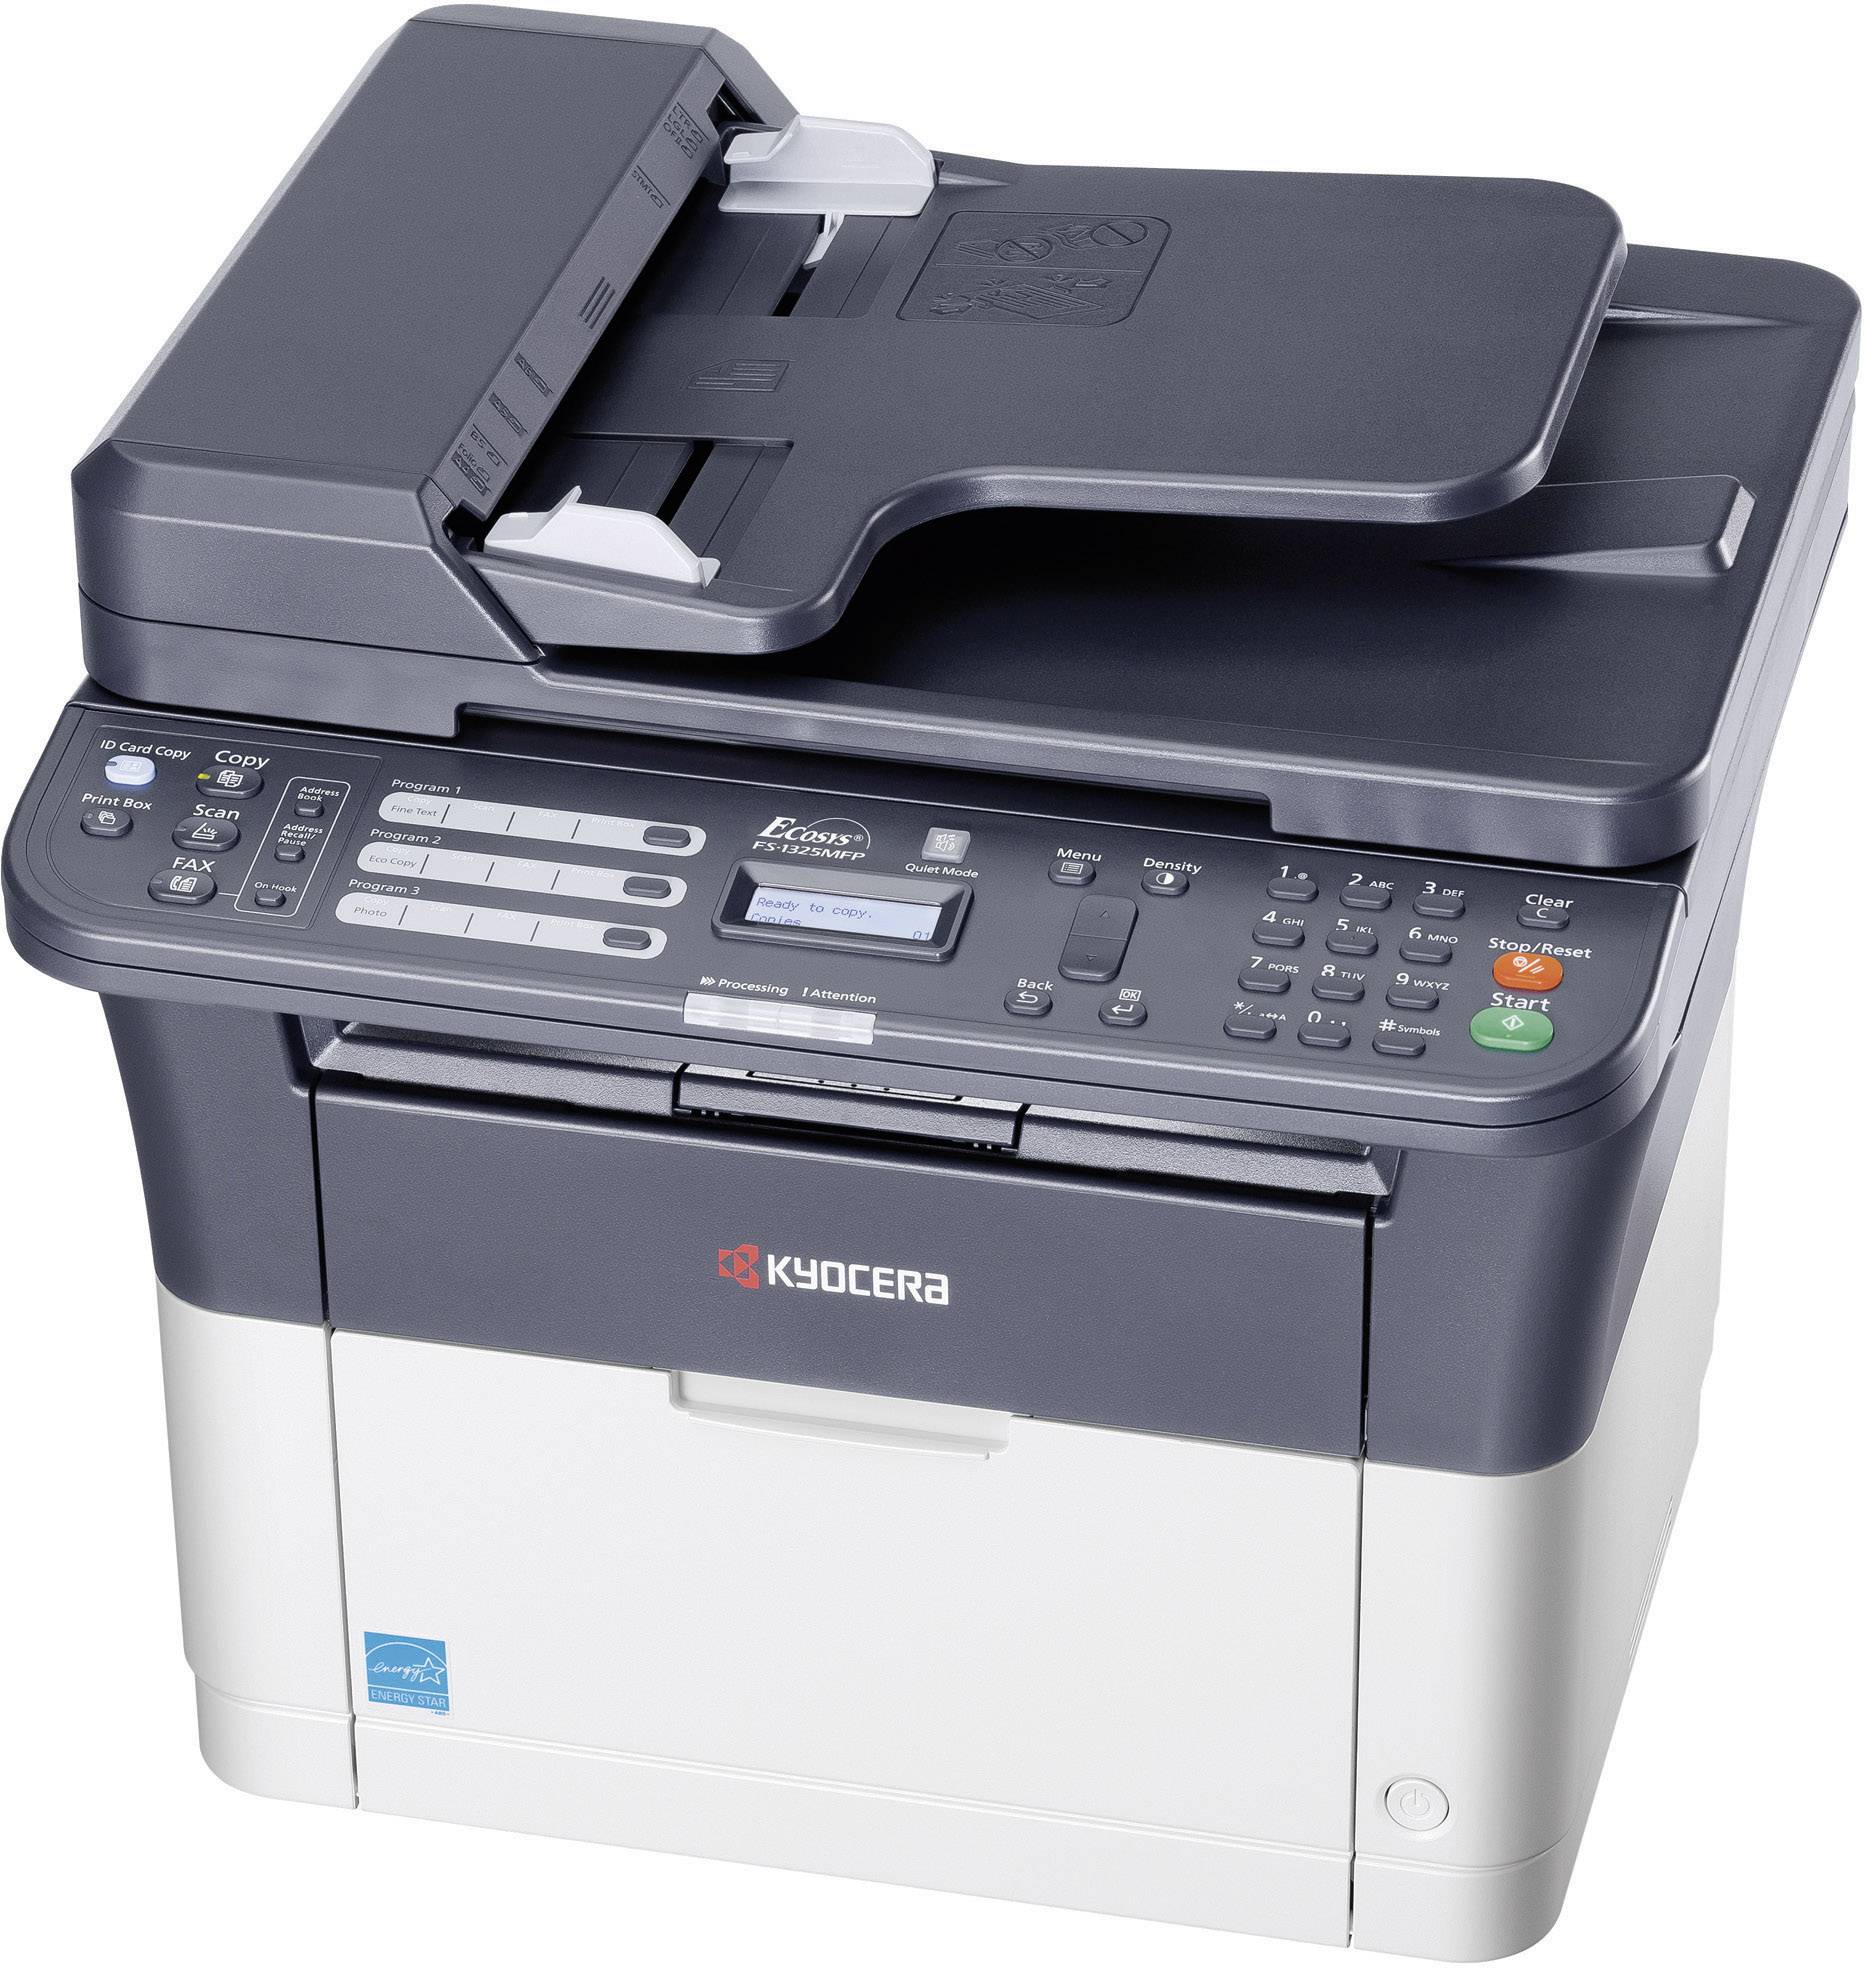 Kyocera FS-1325MFP Mono laser multifunction printer Printer, scanner, copier, fax | Conrad.com